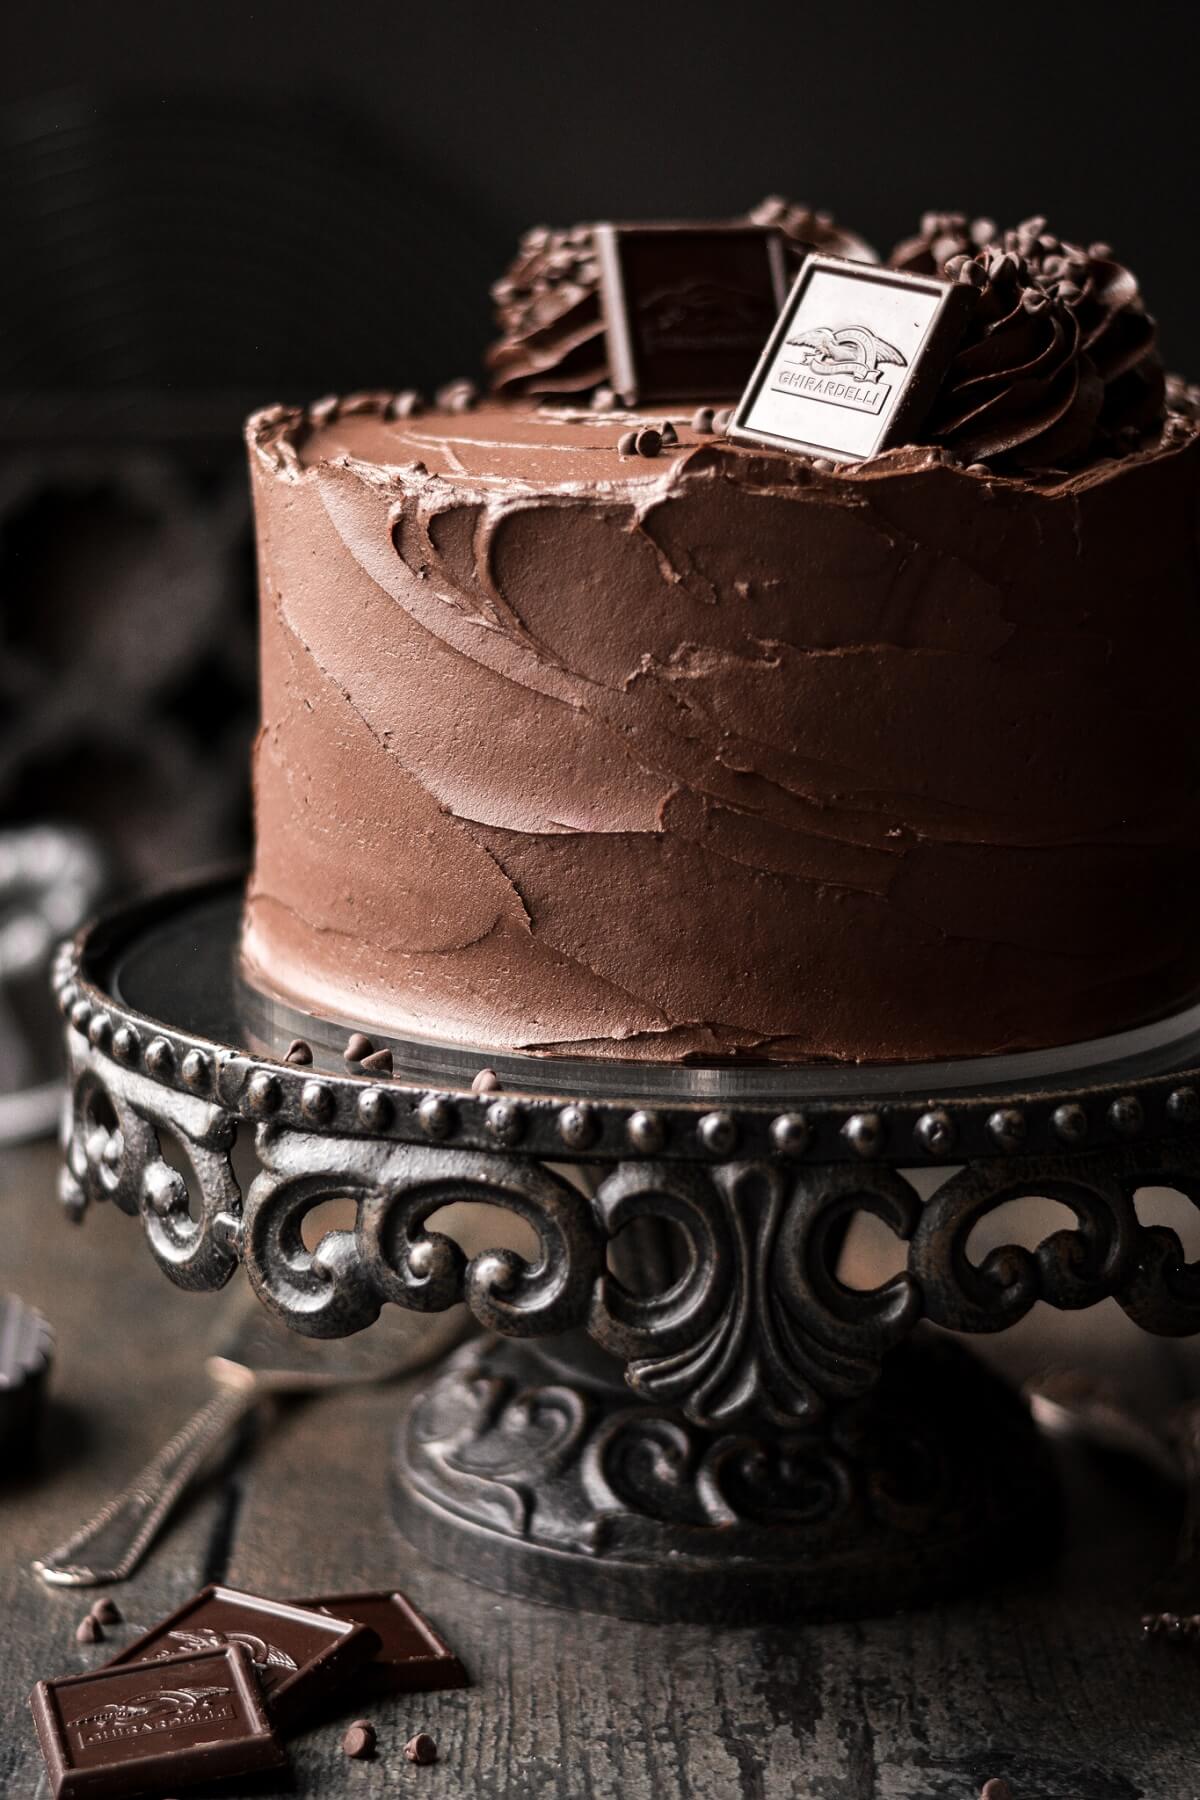 Chocolate cake on a black cake stand.